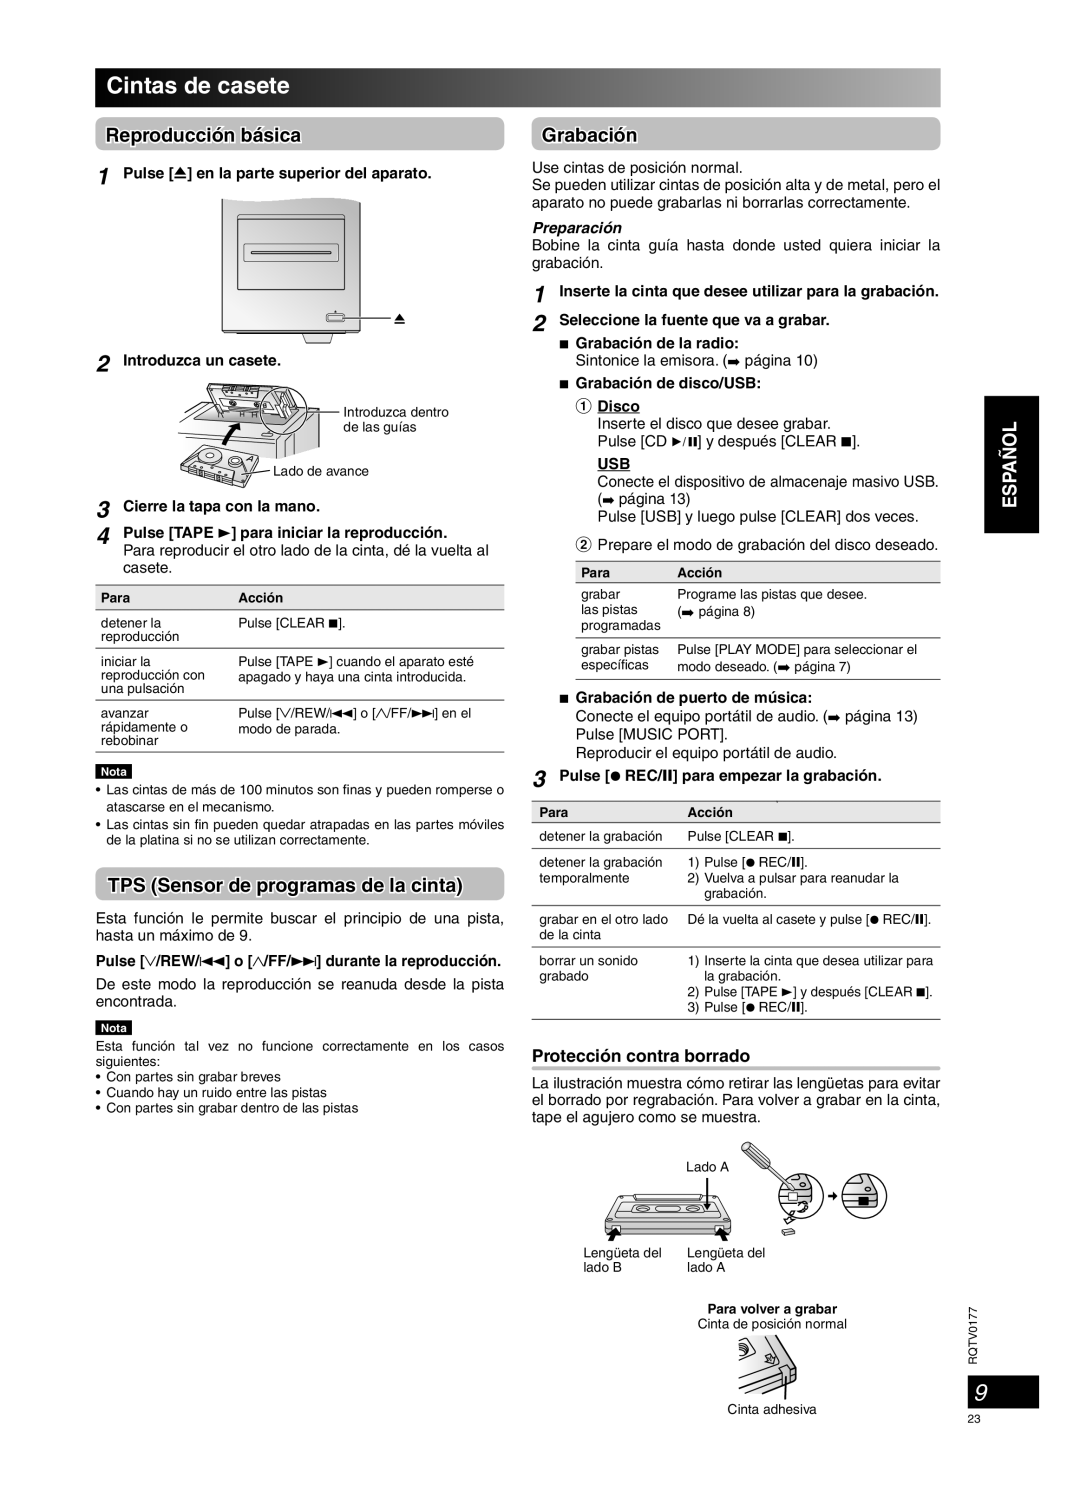 Panasonic SC-PM45 Cintas de casete, TPS Sensor de programas de la cinta, Grabación, Protección contra borrado, Español 